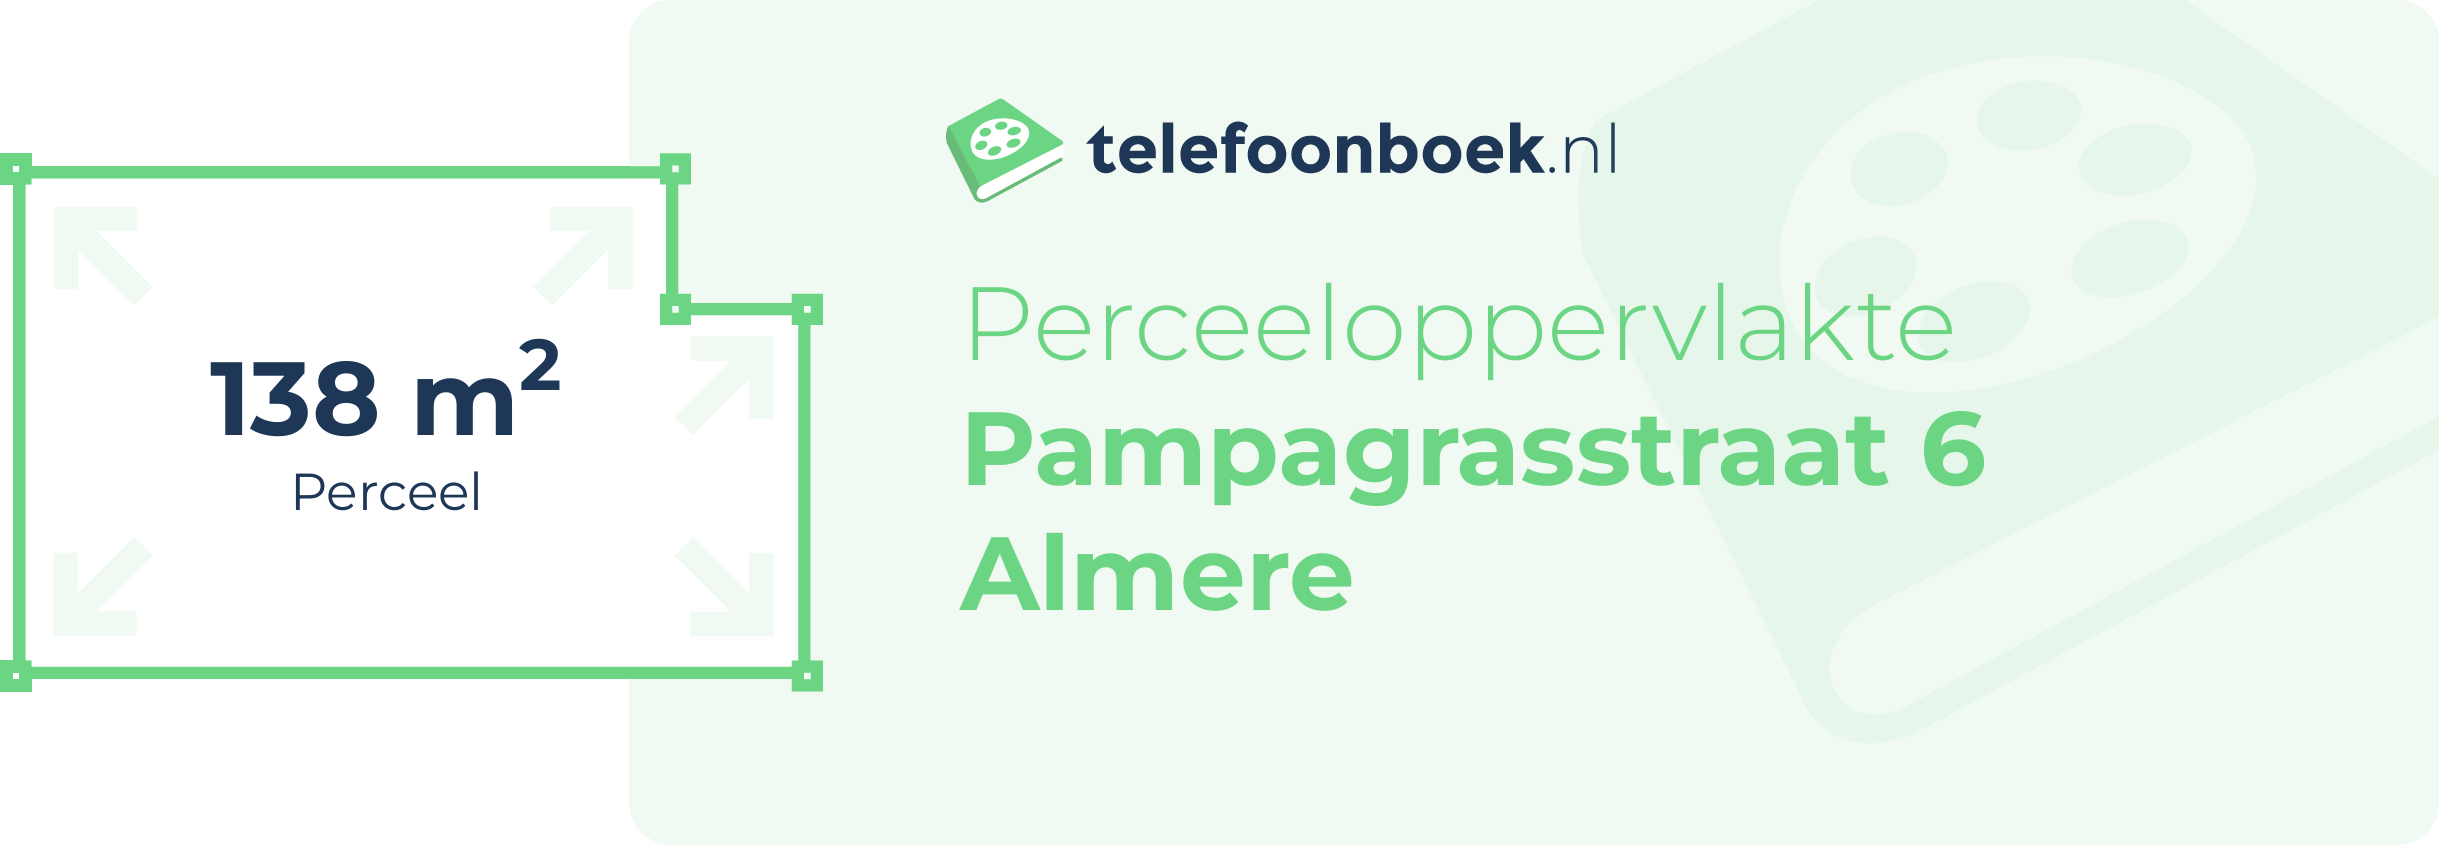 Perceeloppervlakte Pampagrasstraat 6 Almere